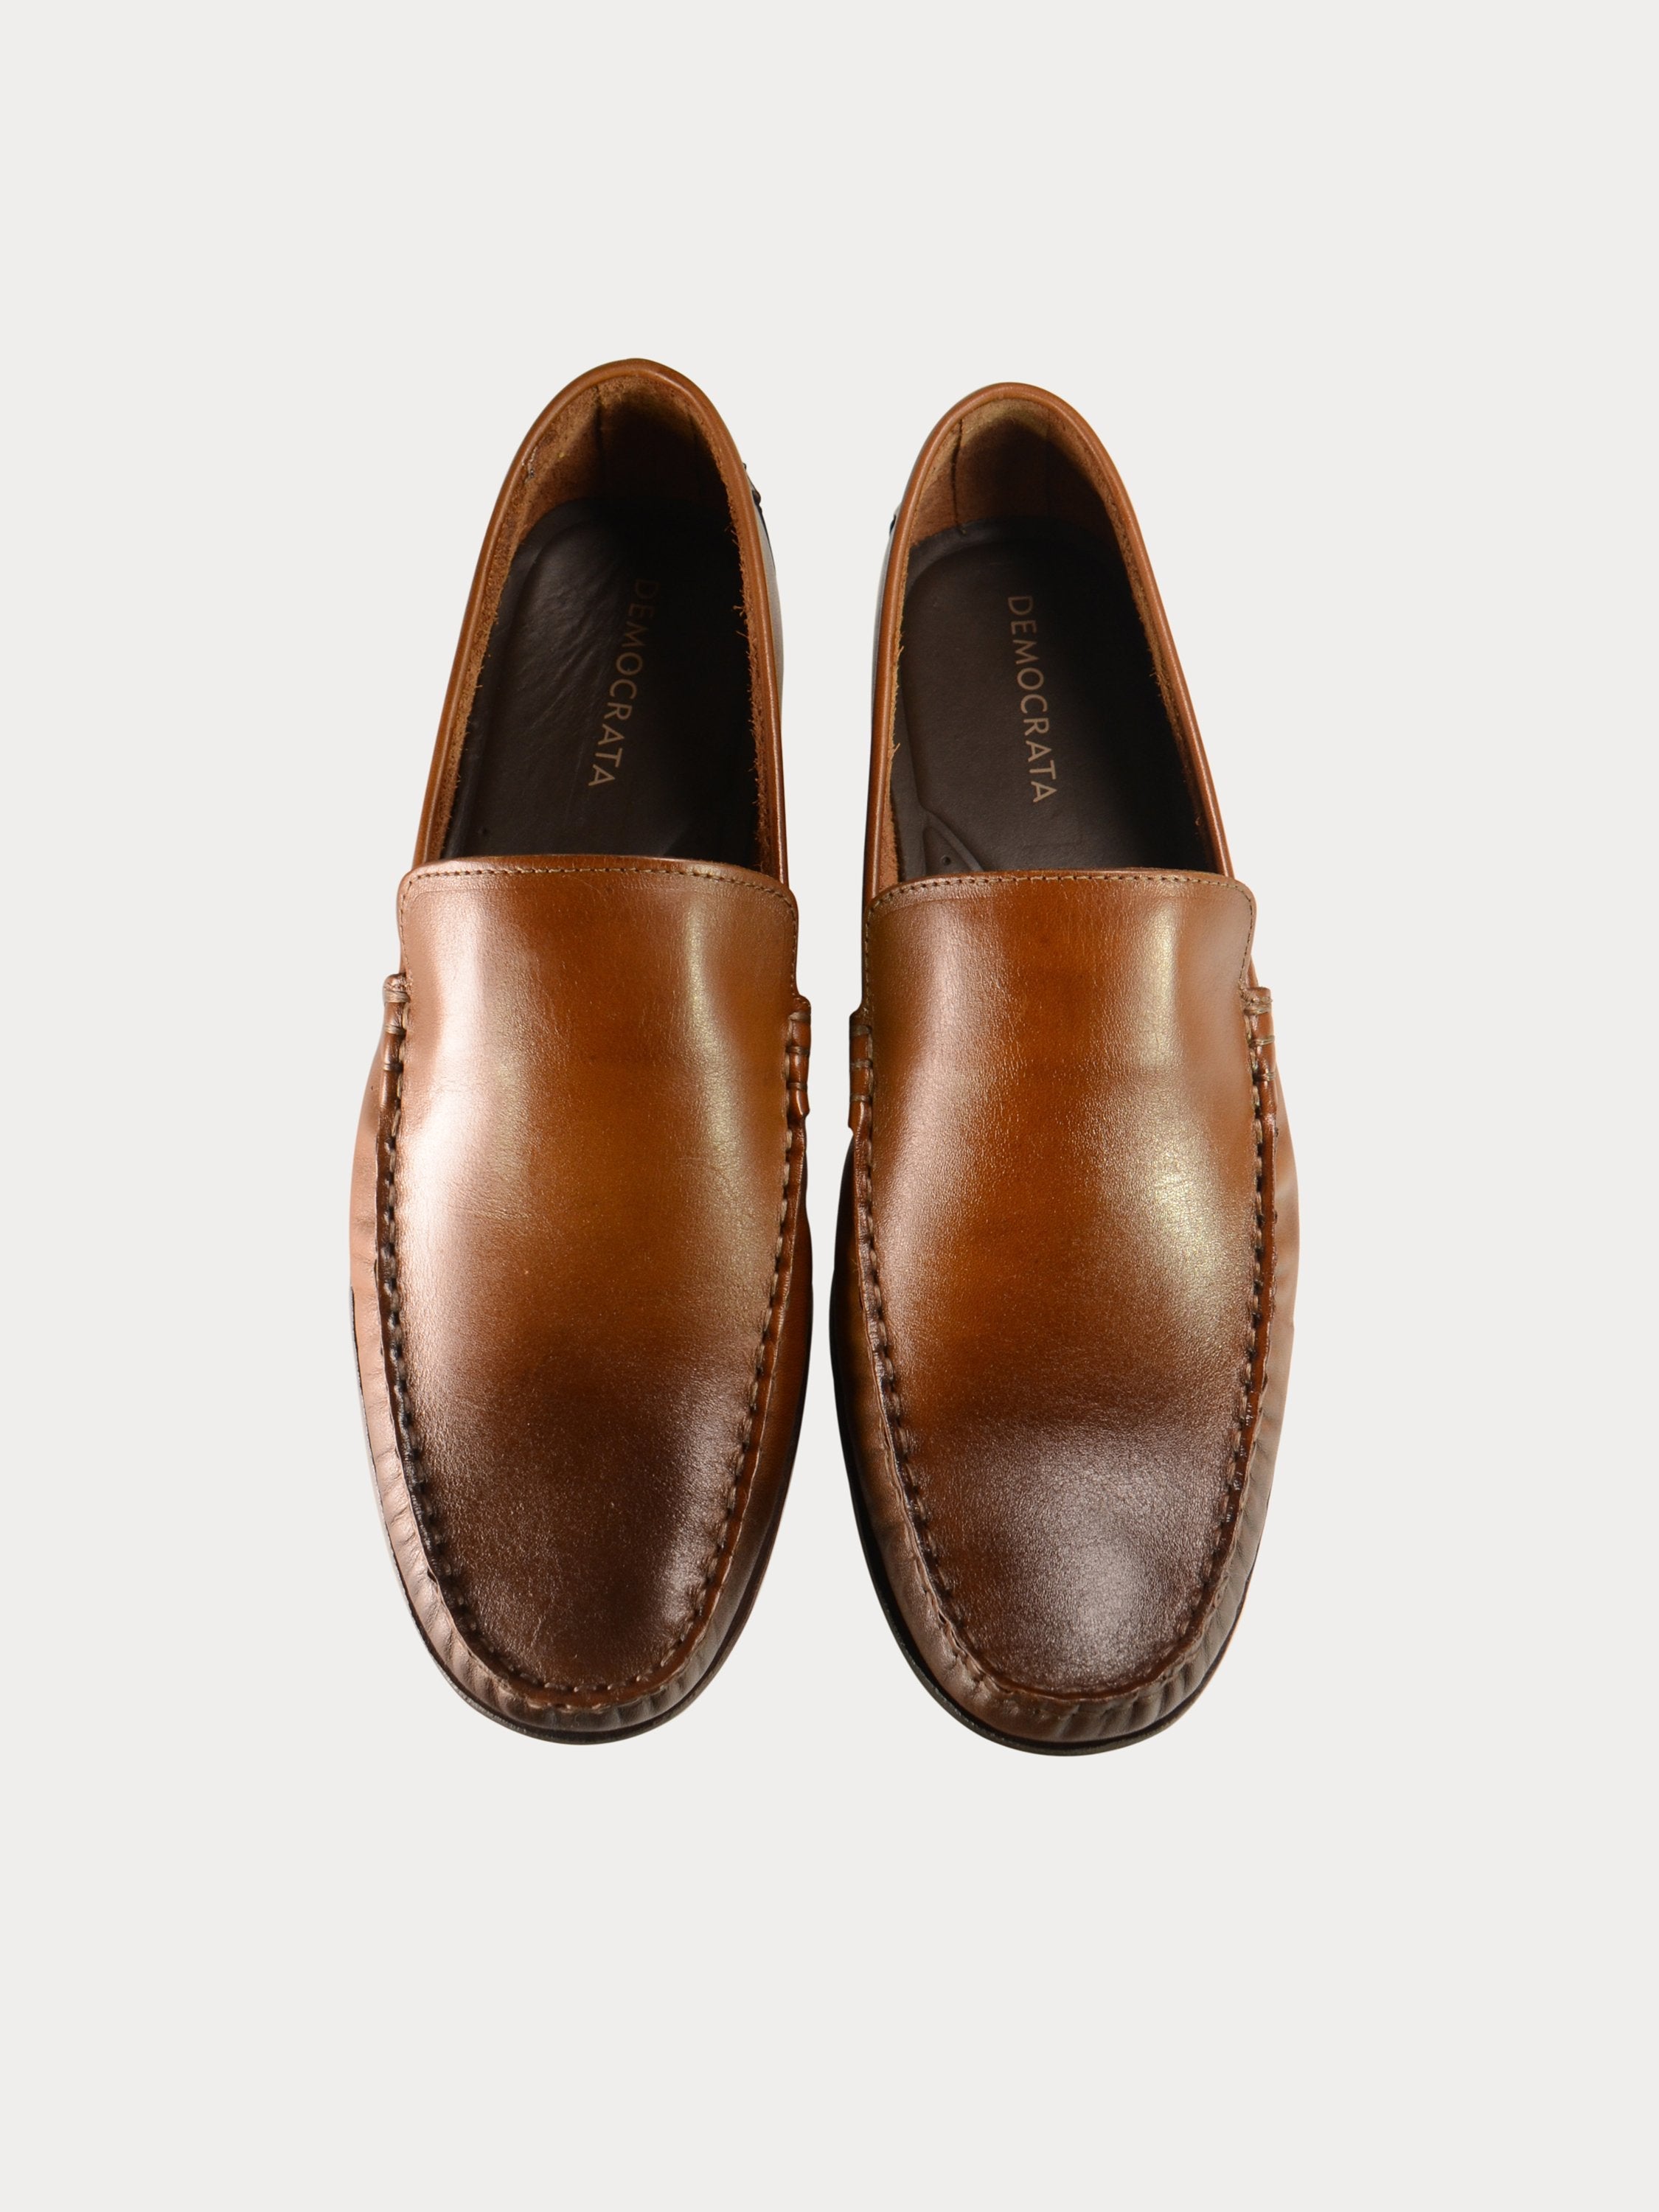 Democrata Cruiser Men's Formal Leather Shoes #color_Tan